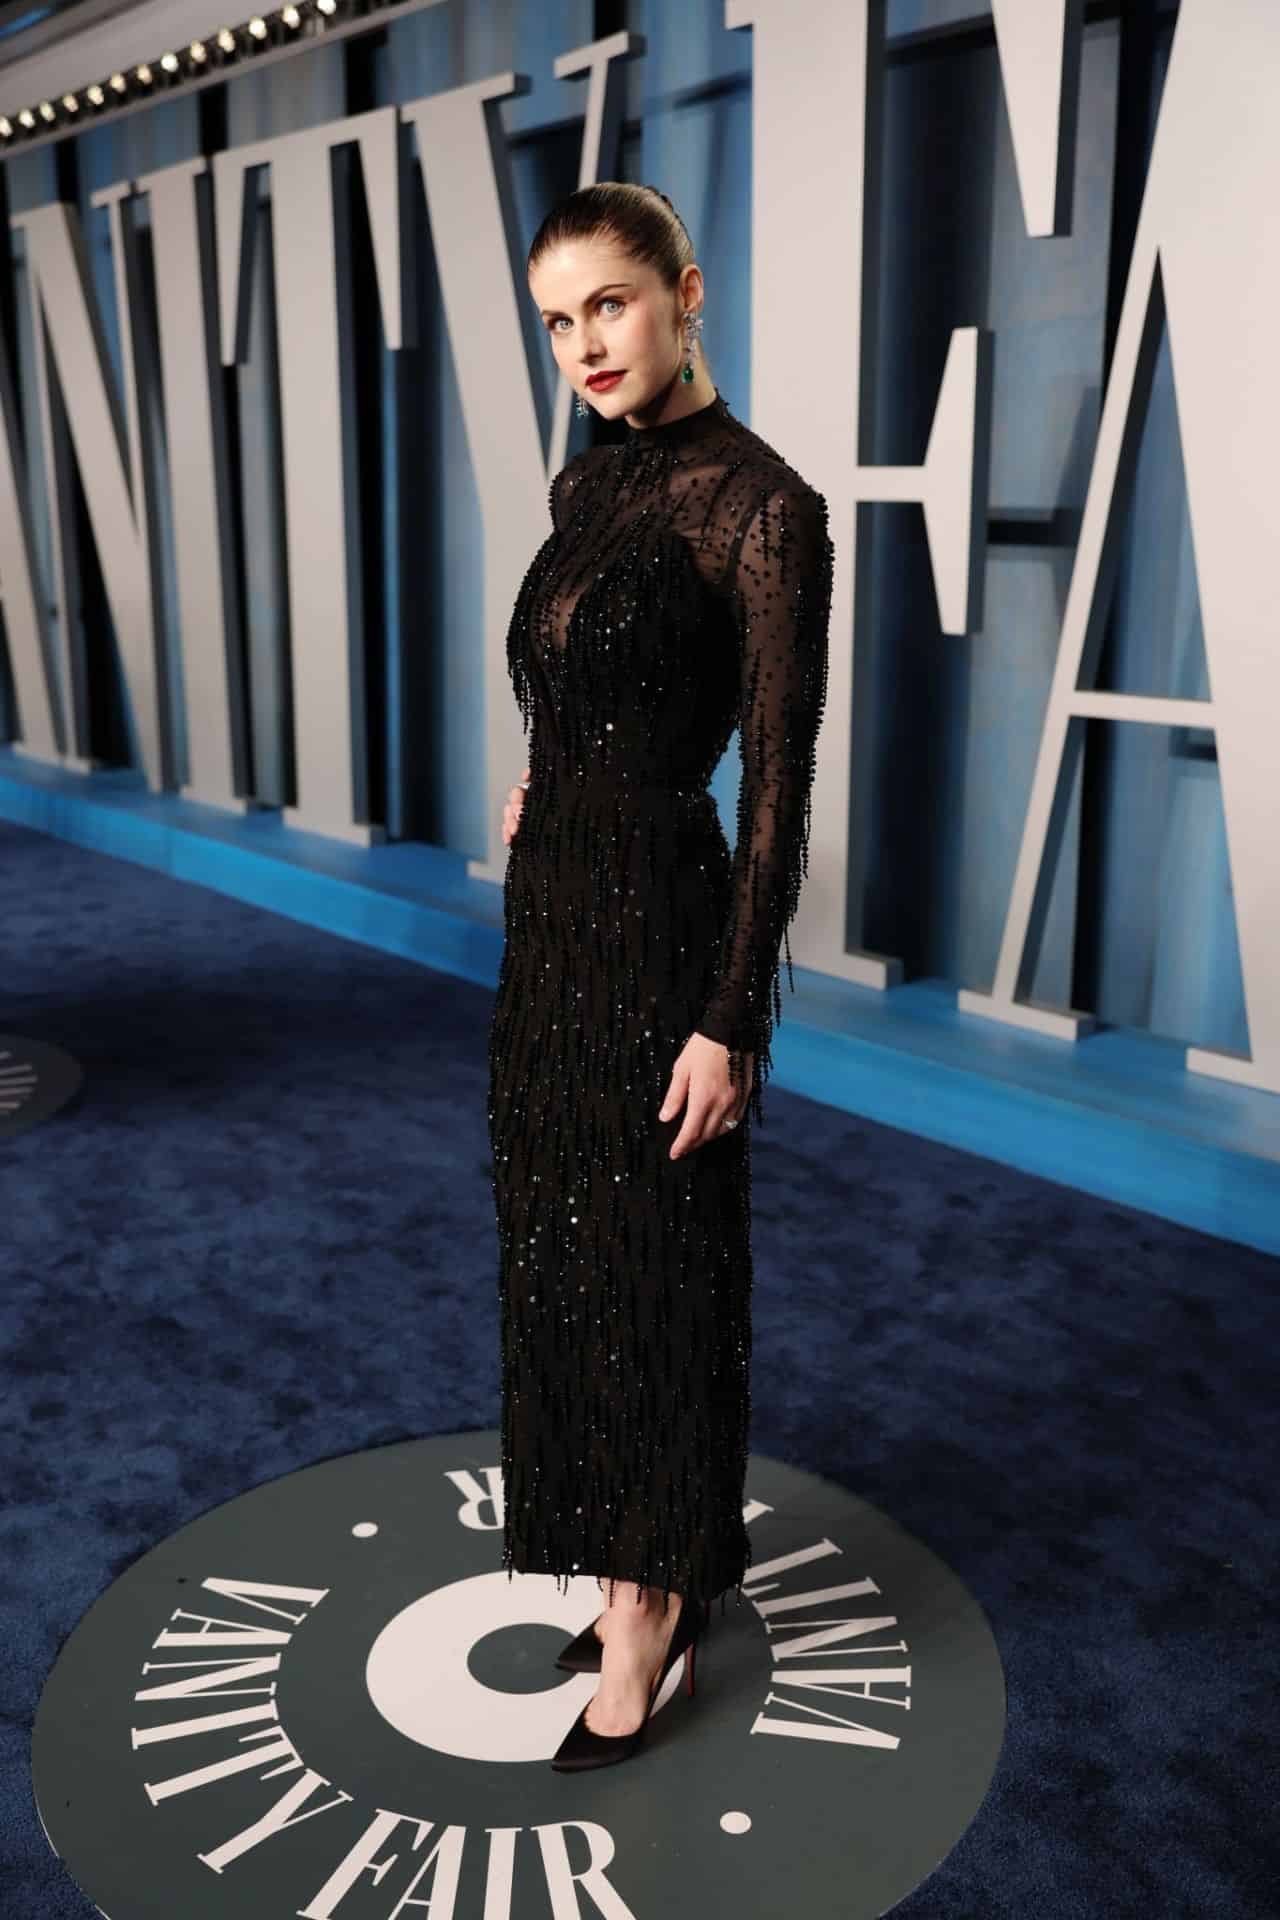 Alexandra Daddario Shines in a Sheer Dress at 2022 Vanity Fair Oscar Party